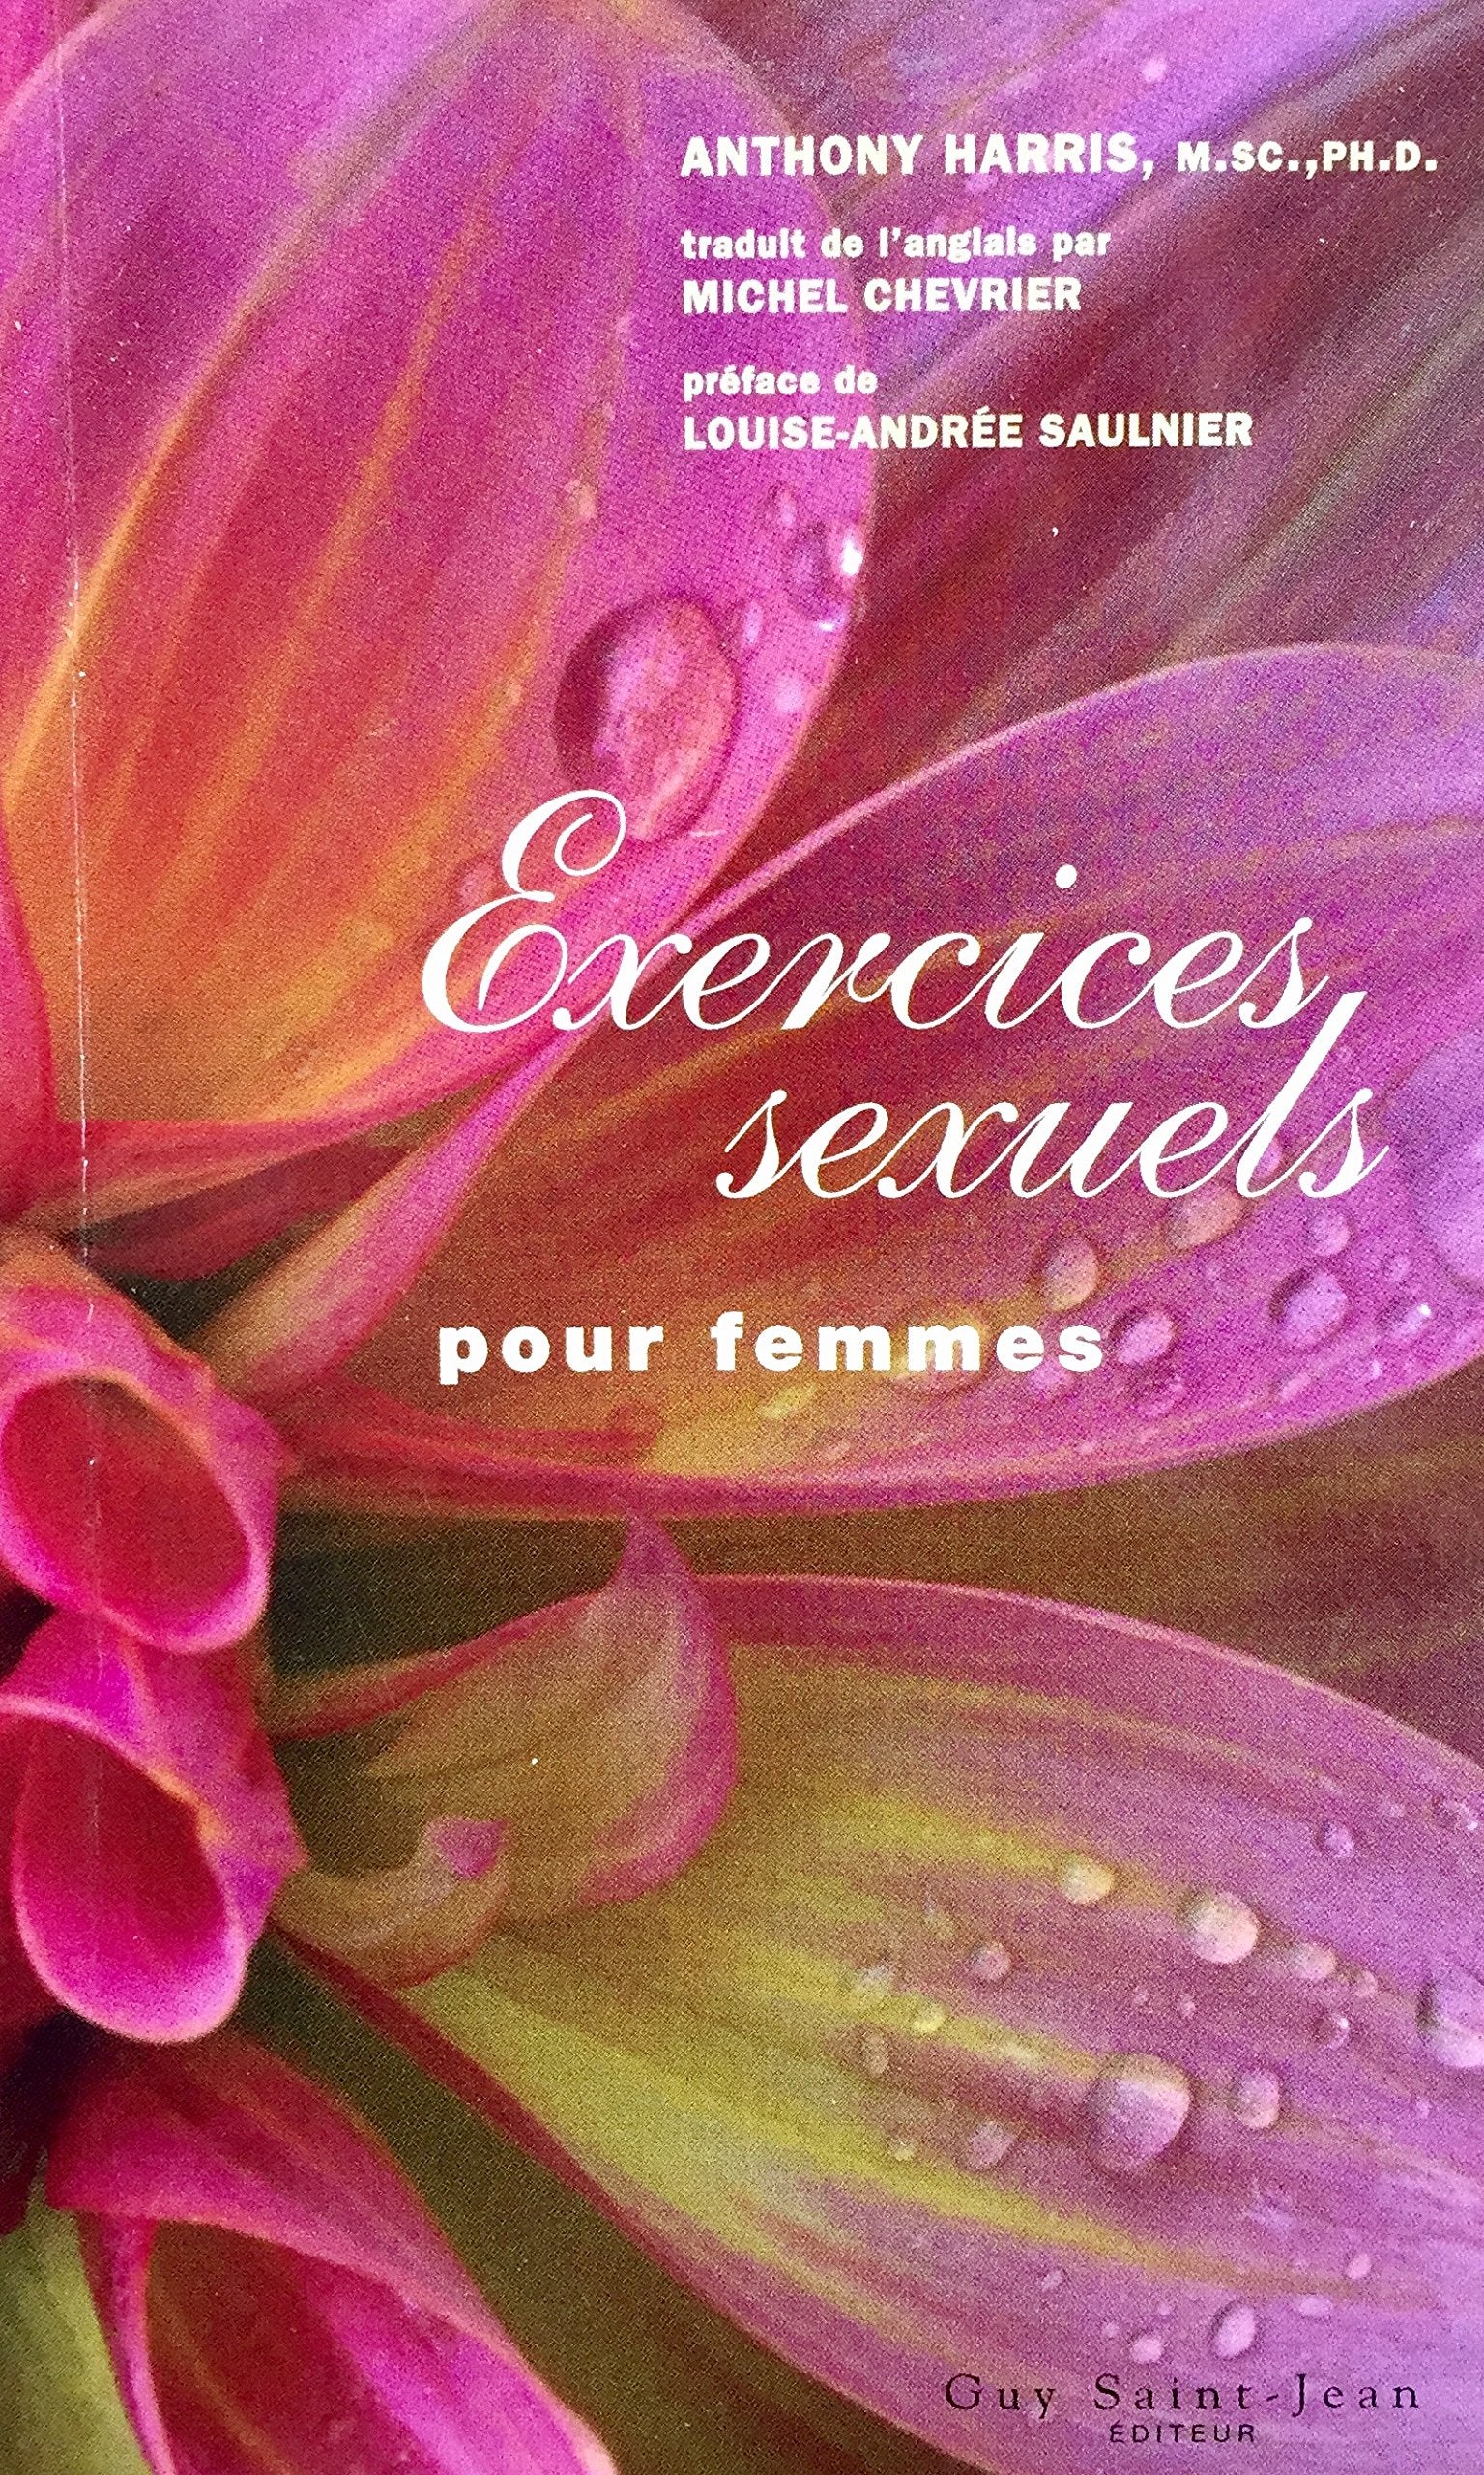 Livre ISBN 2894550936 Exercices sexuels pour femmes (Anthony Harris)